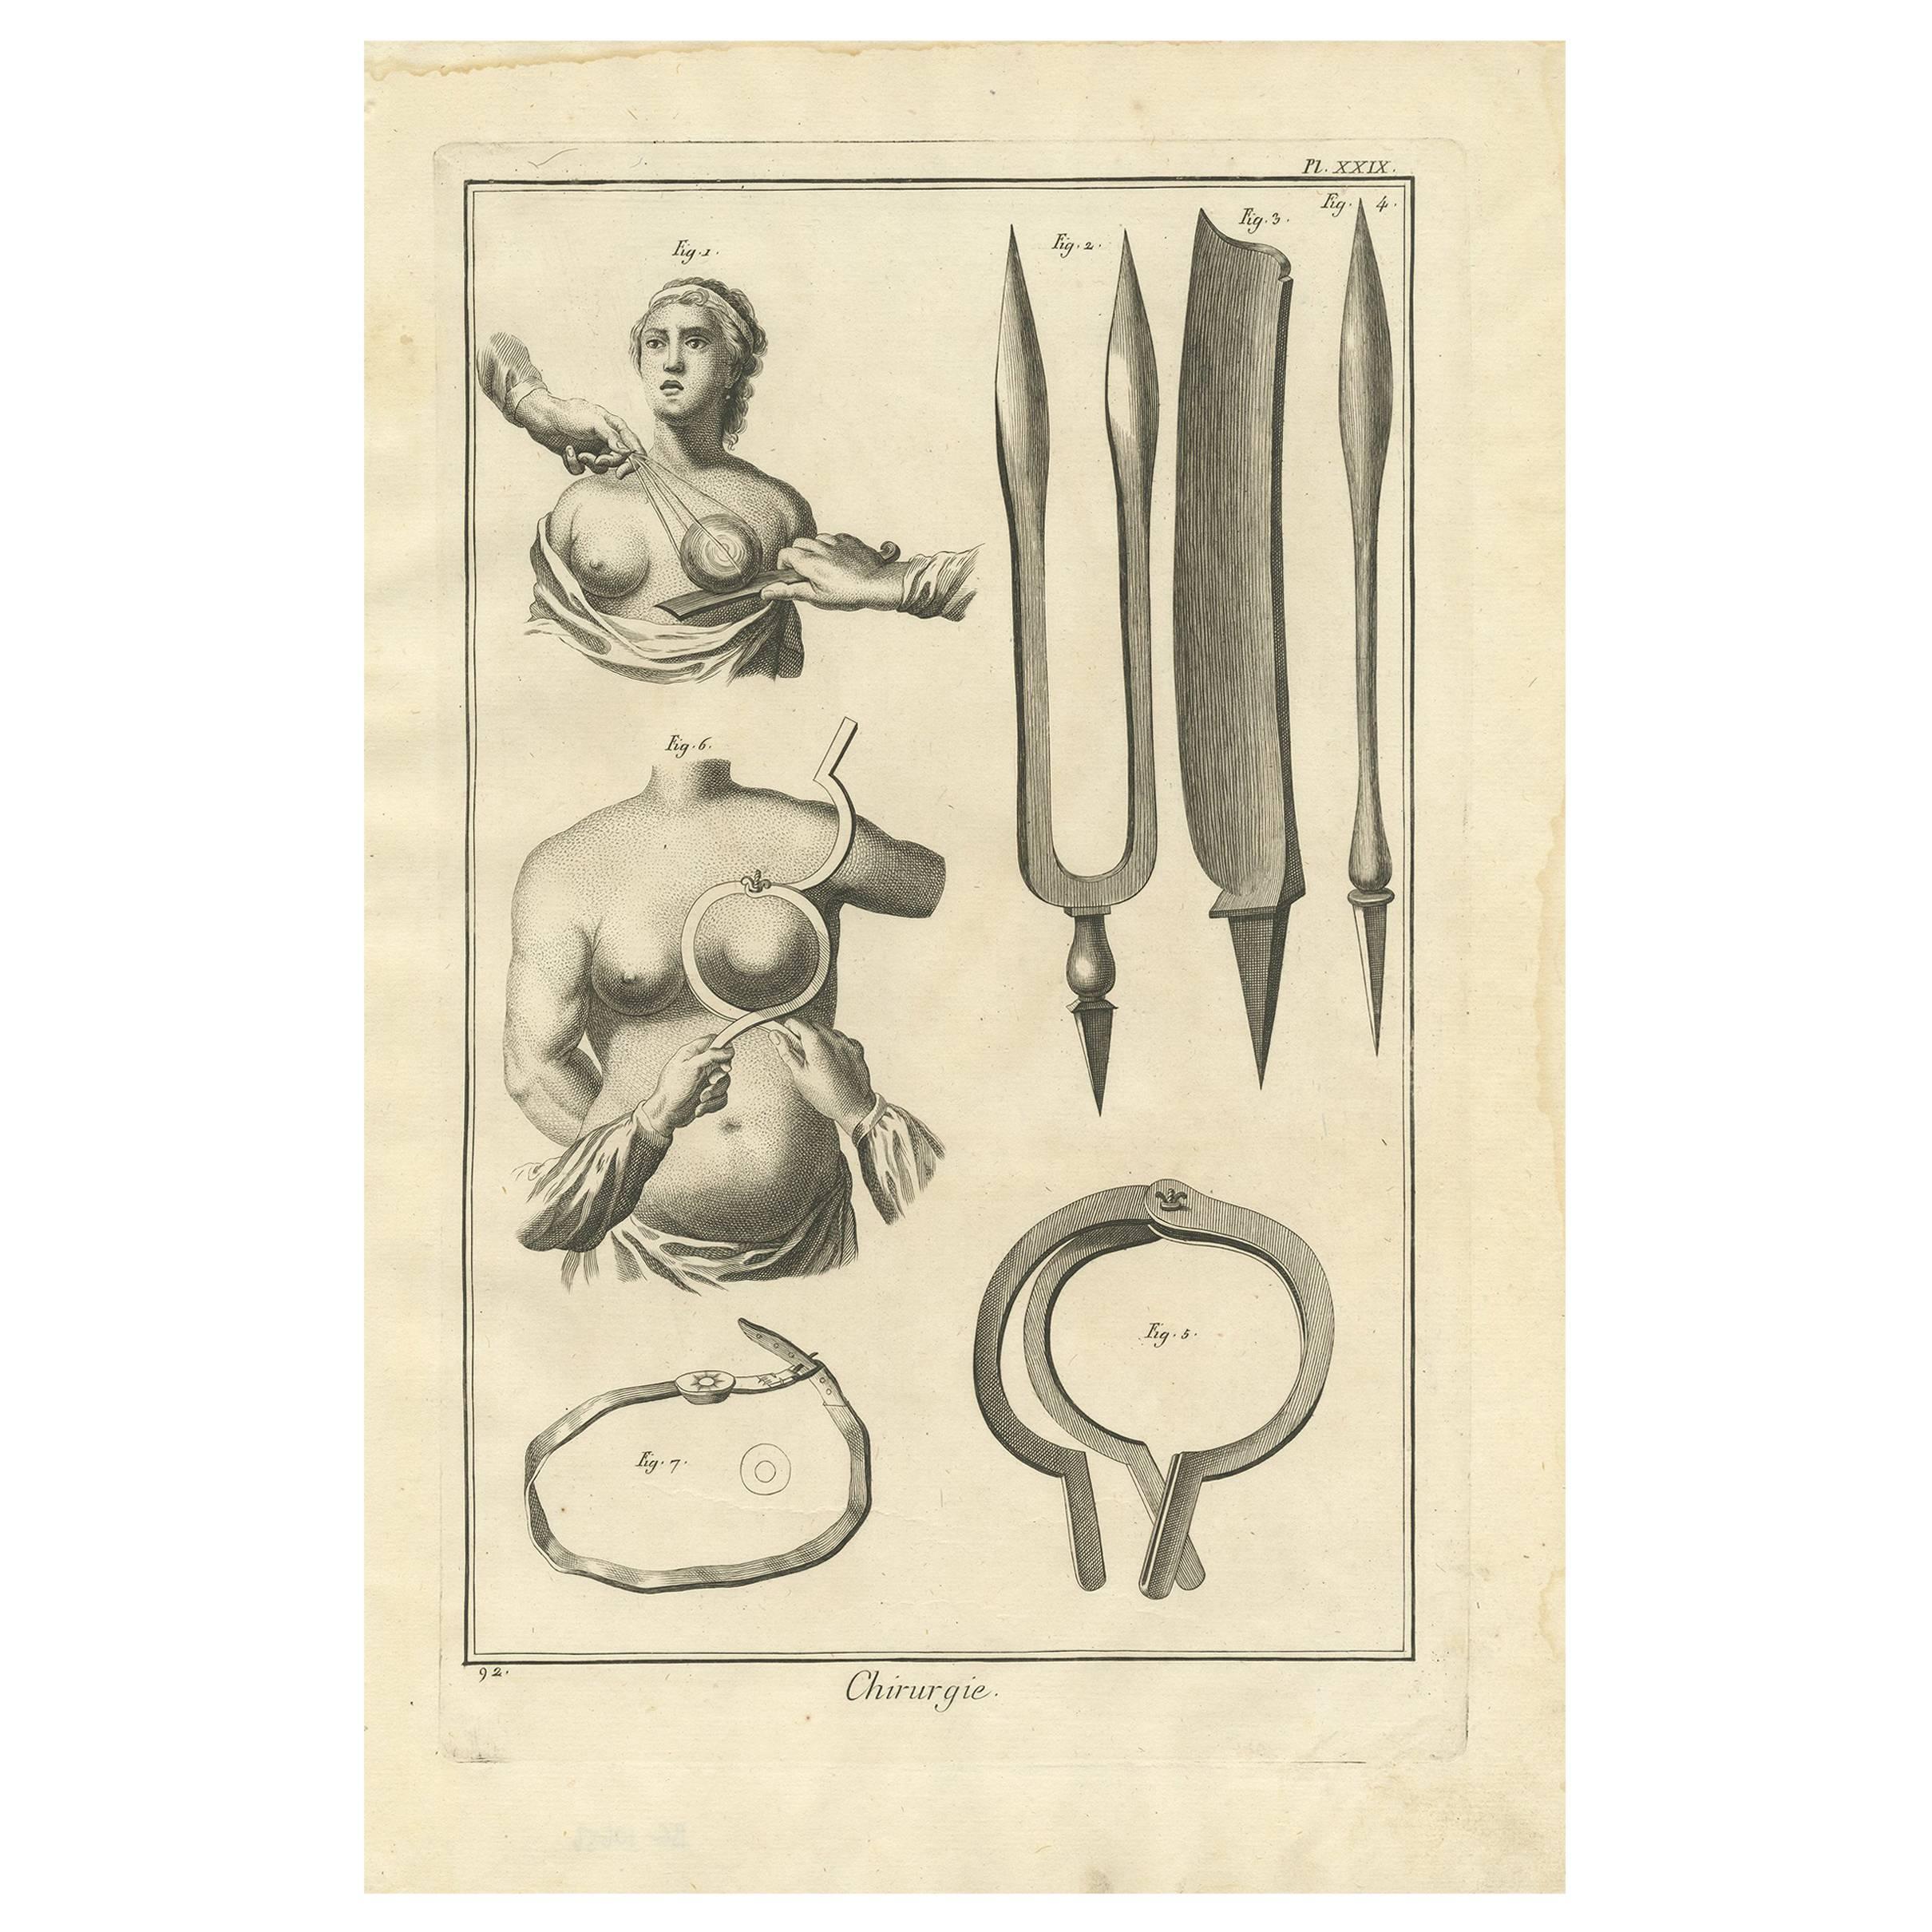 Antique Medical Print 'Pl. XXIX' by D. Diderot, circa 1760